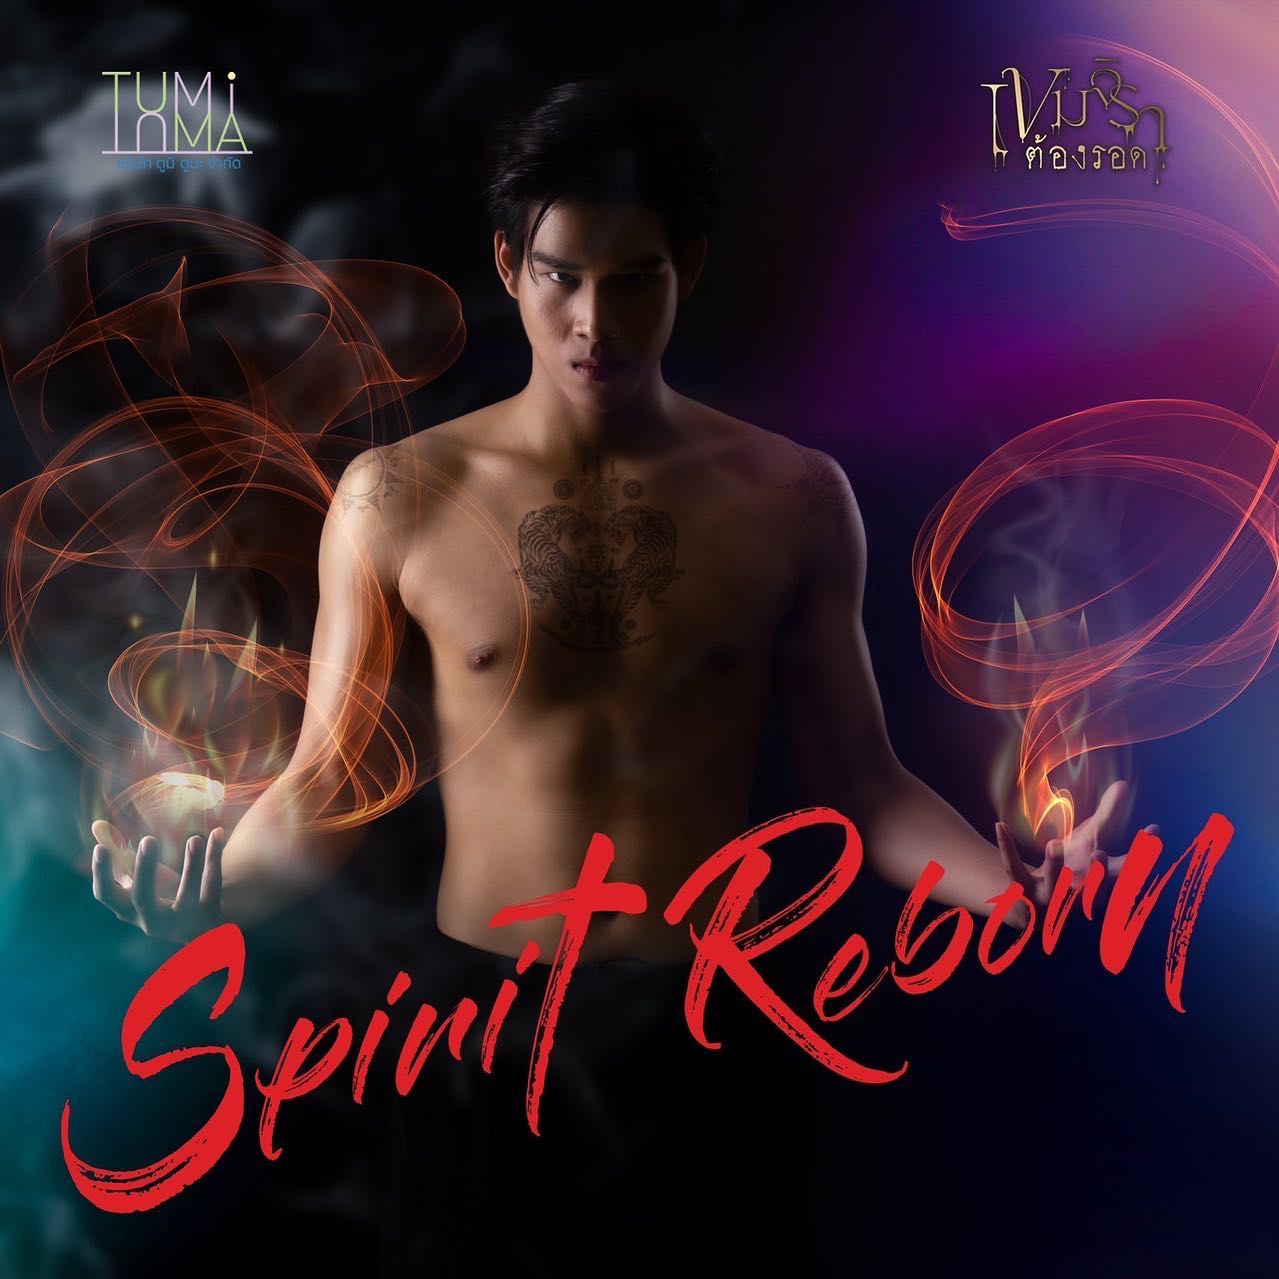 Chap Suppacheep and Peipei Krit to Star in New Thai BL Series, 'Spirit Reborn The Series'